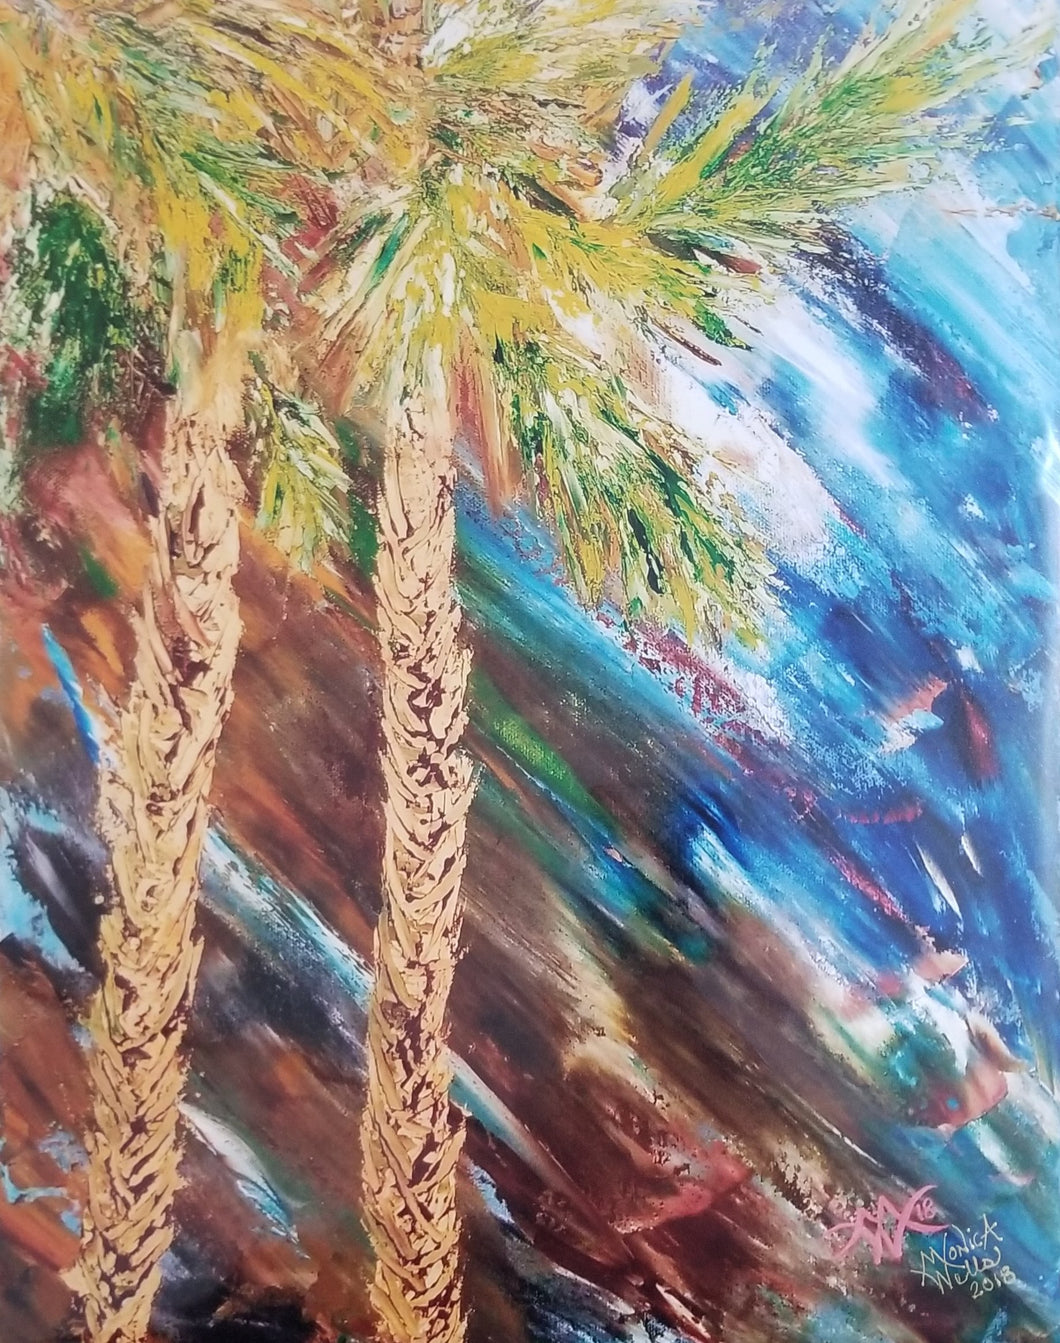 Palms on the Beach